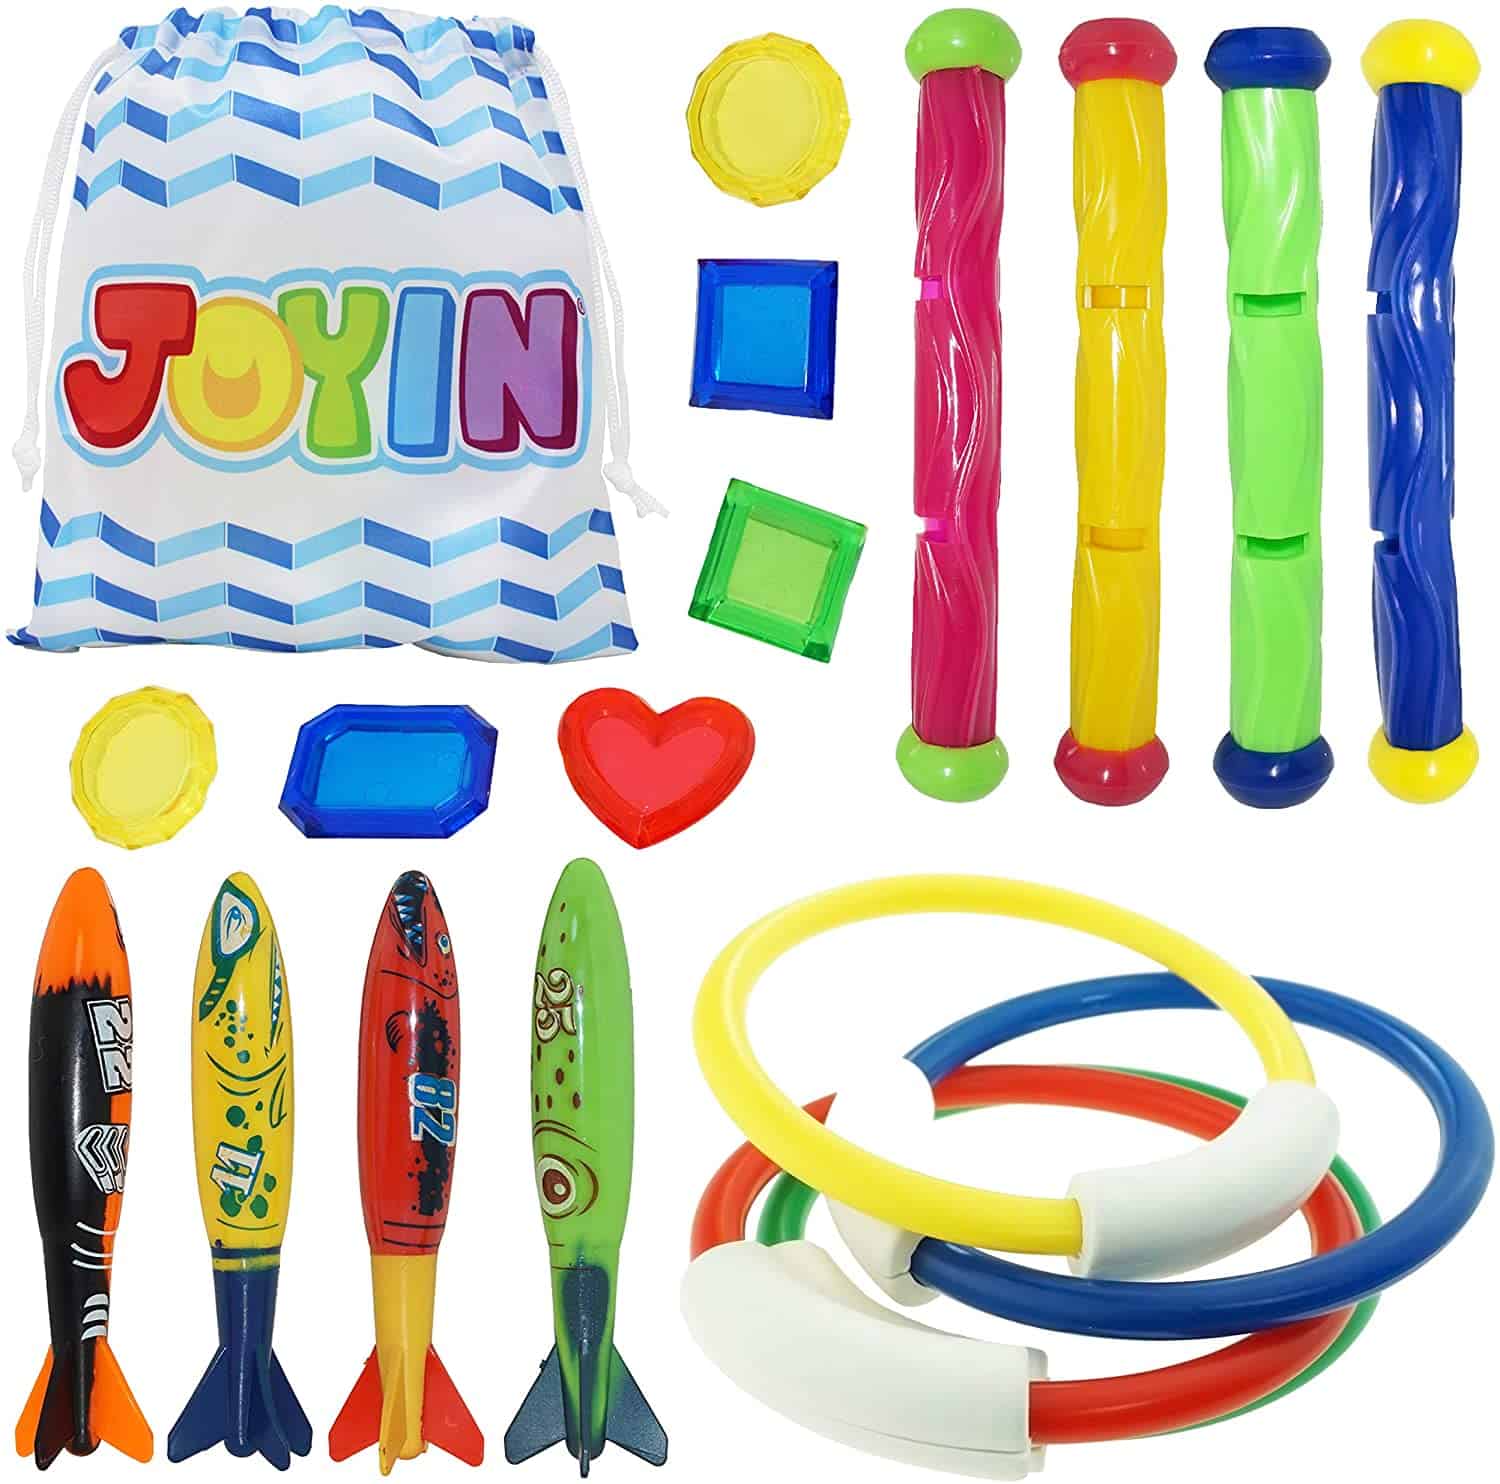 Best beach toys from 6 years old- JOYIN Toys Underwater